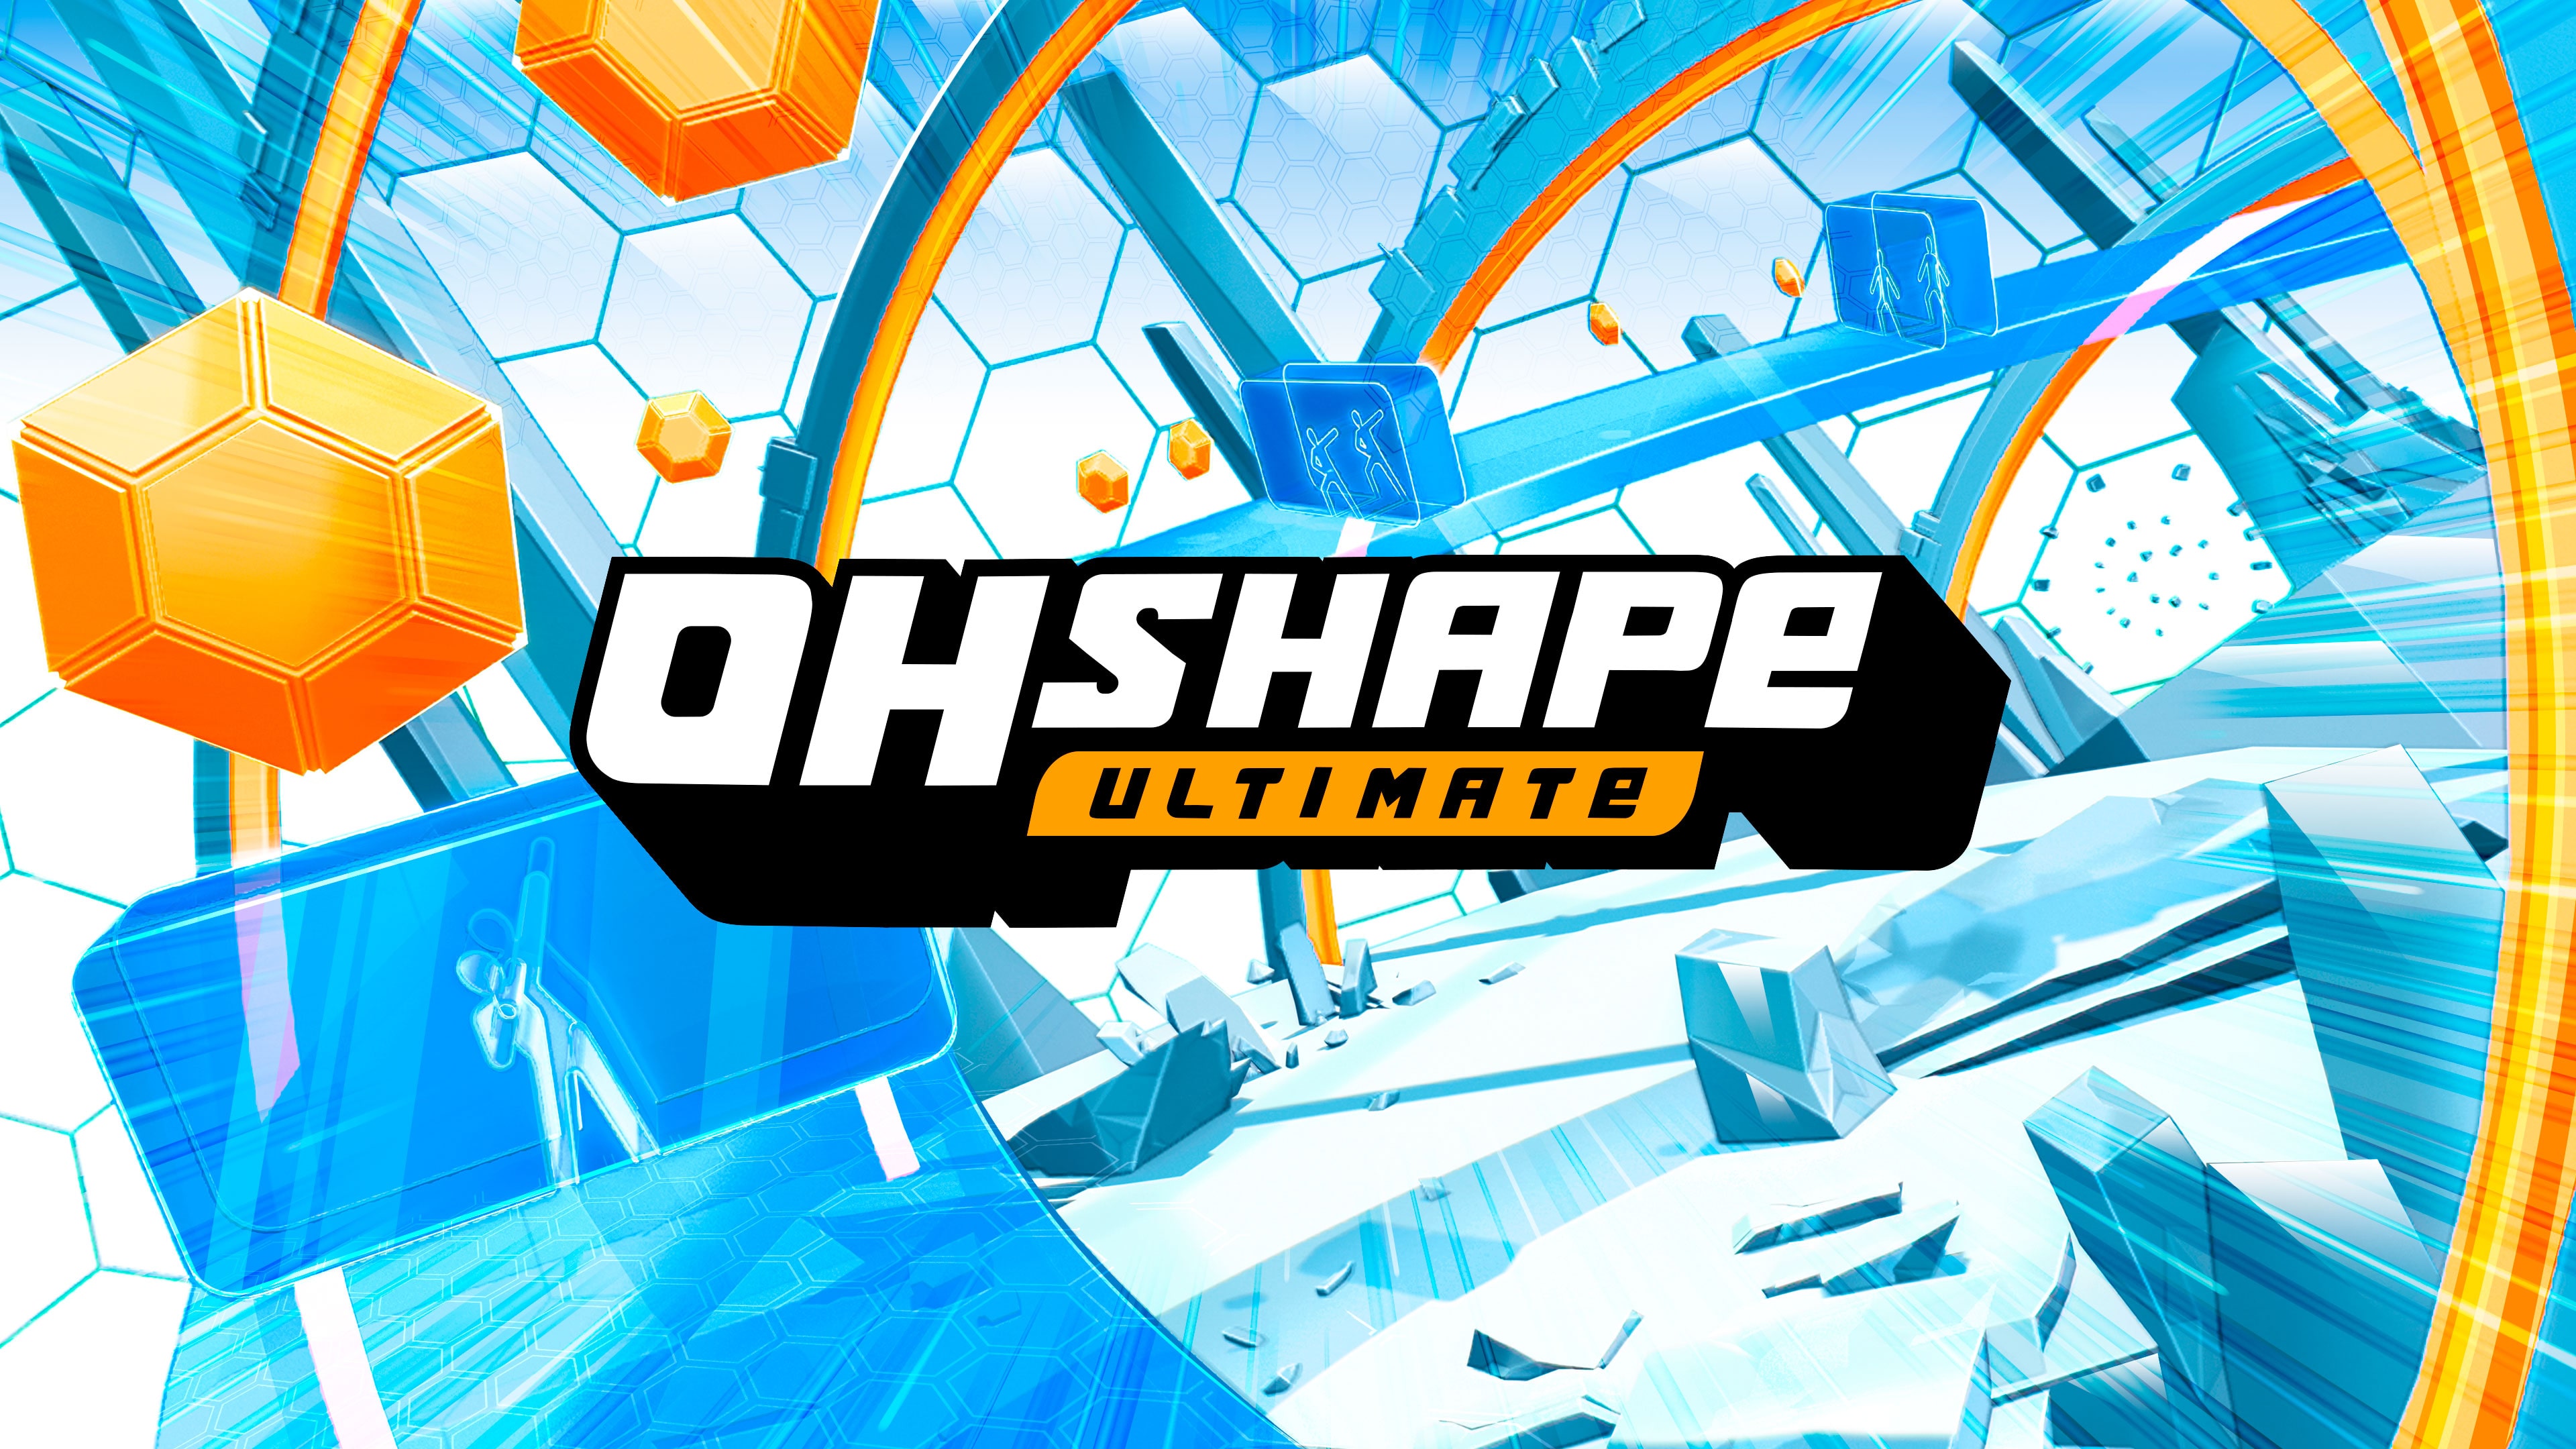 OhShape Ultimate (Simplified Chinese, English, Korean, Japanese)